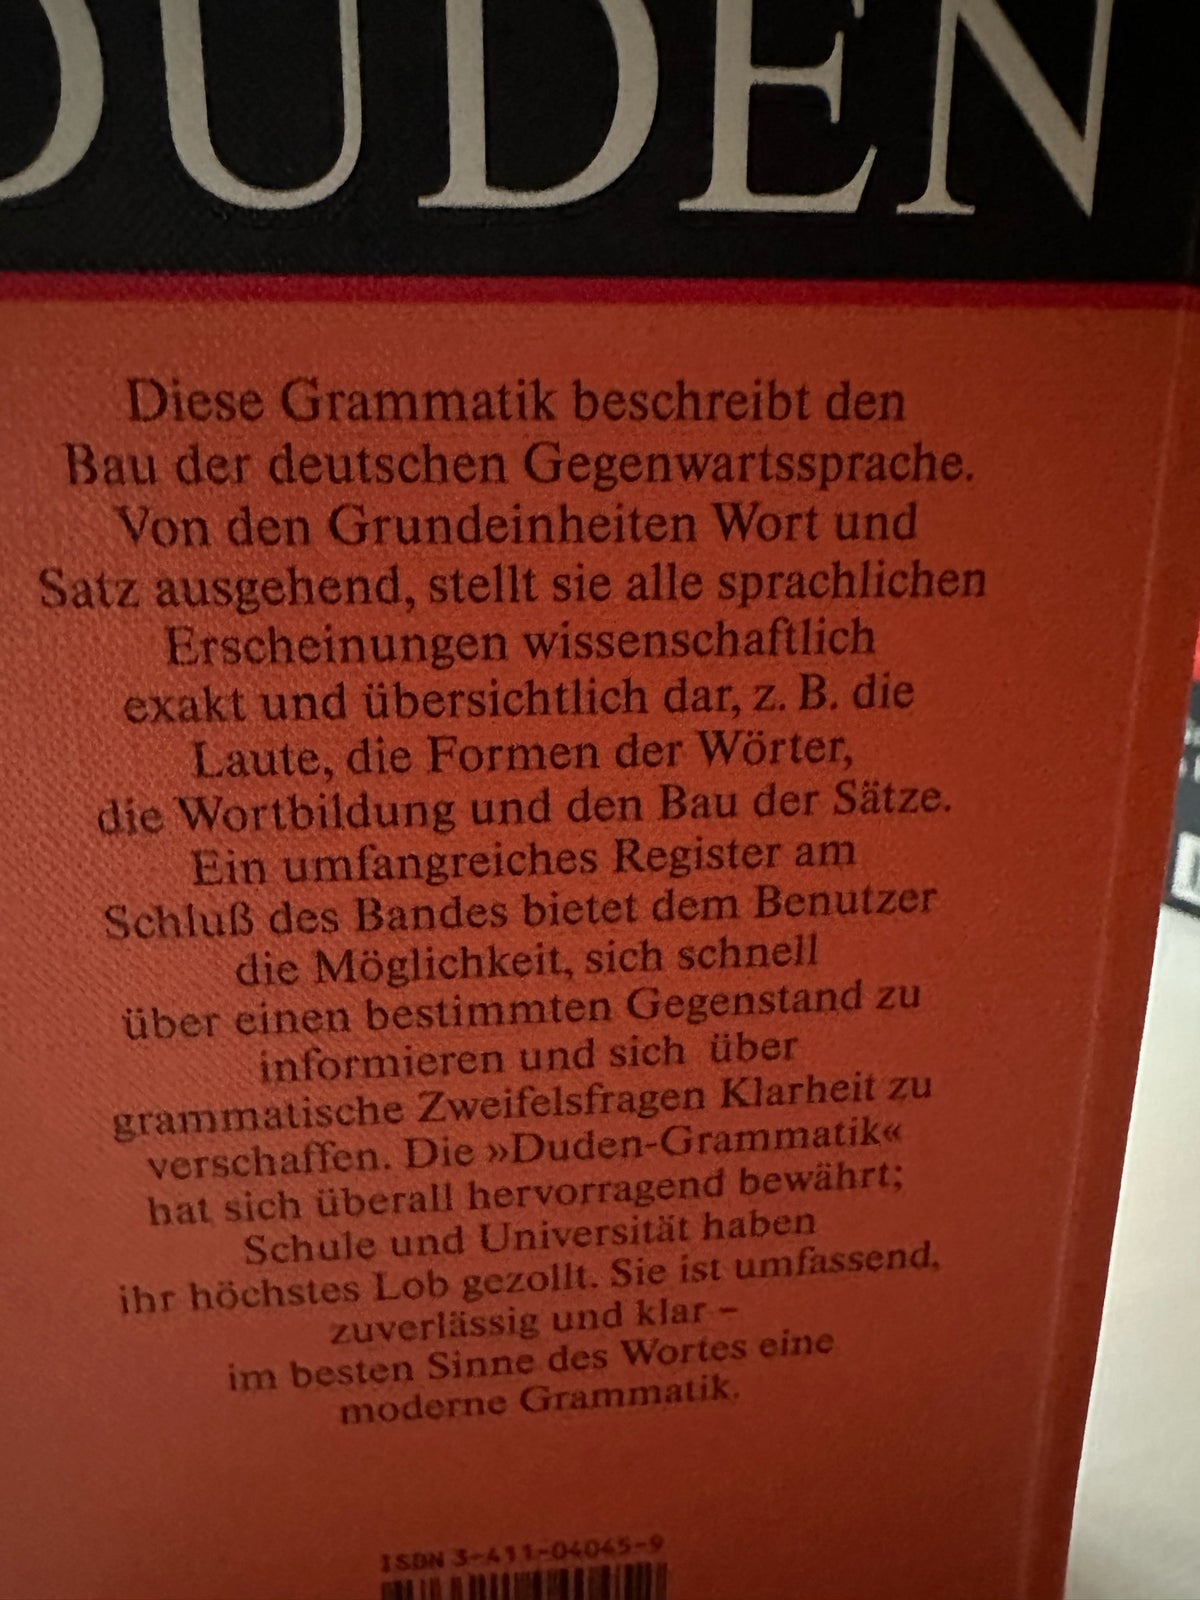 DUDEN, Tysk ordbøger, år 1996